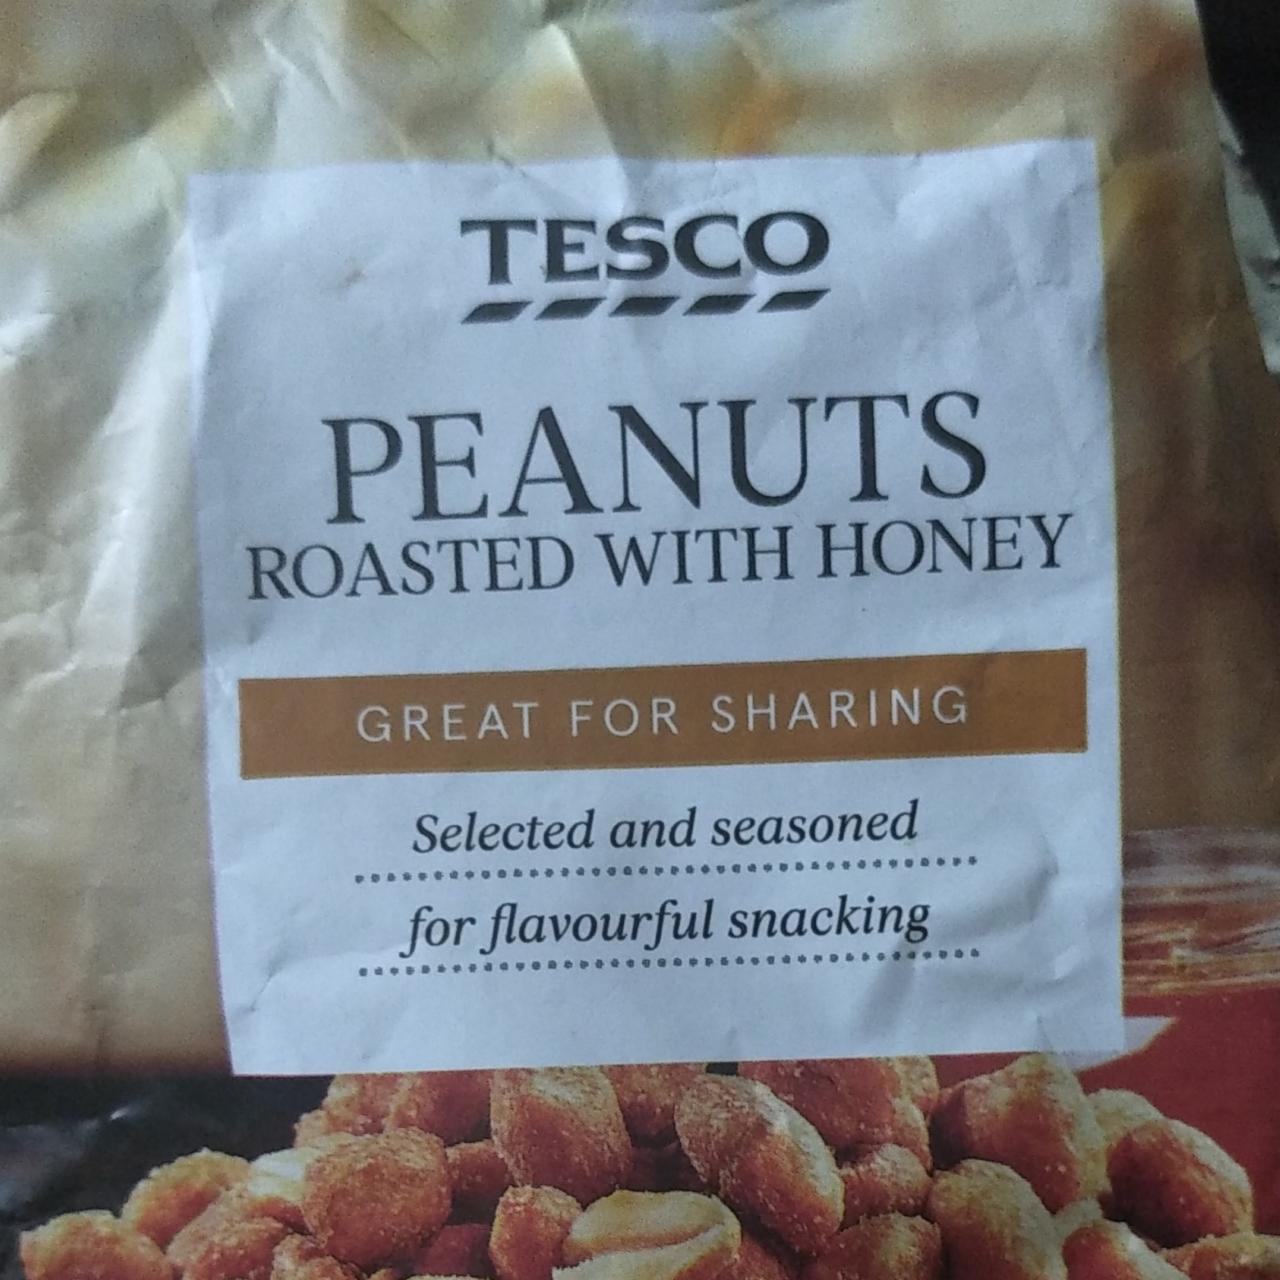 Képek - Peanuts roasted with honey Tesco